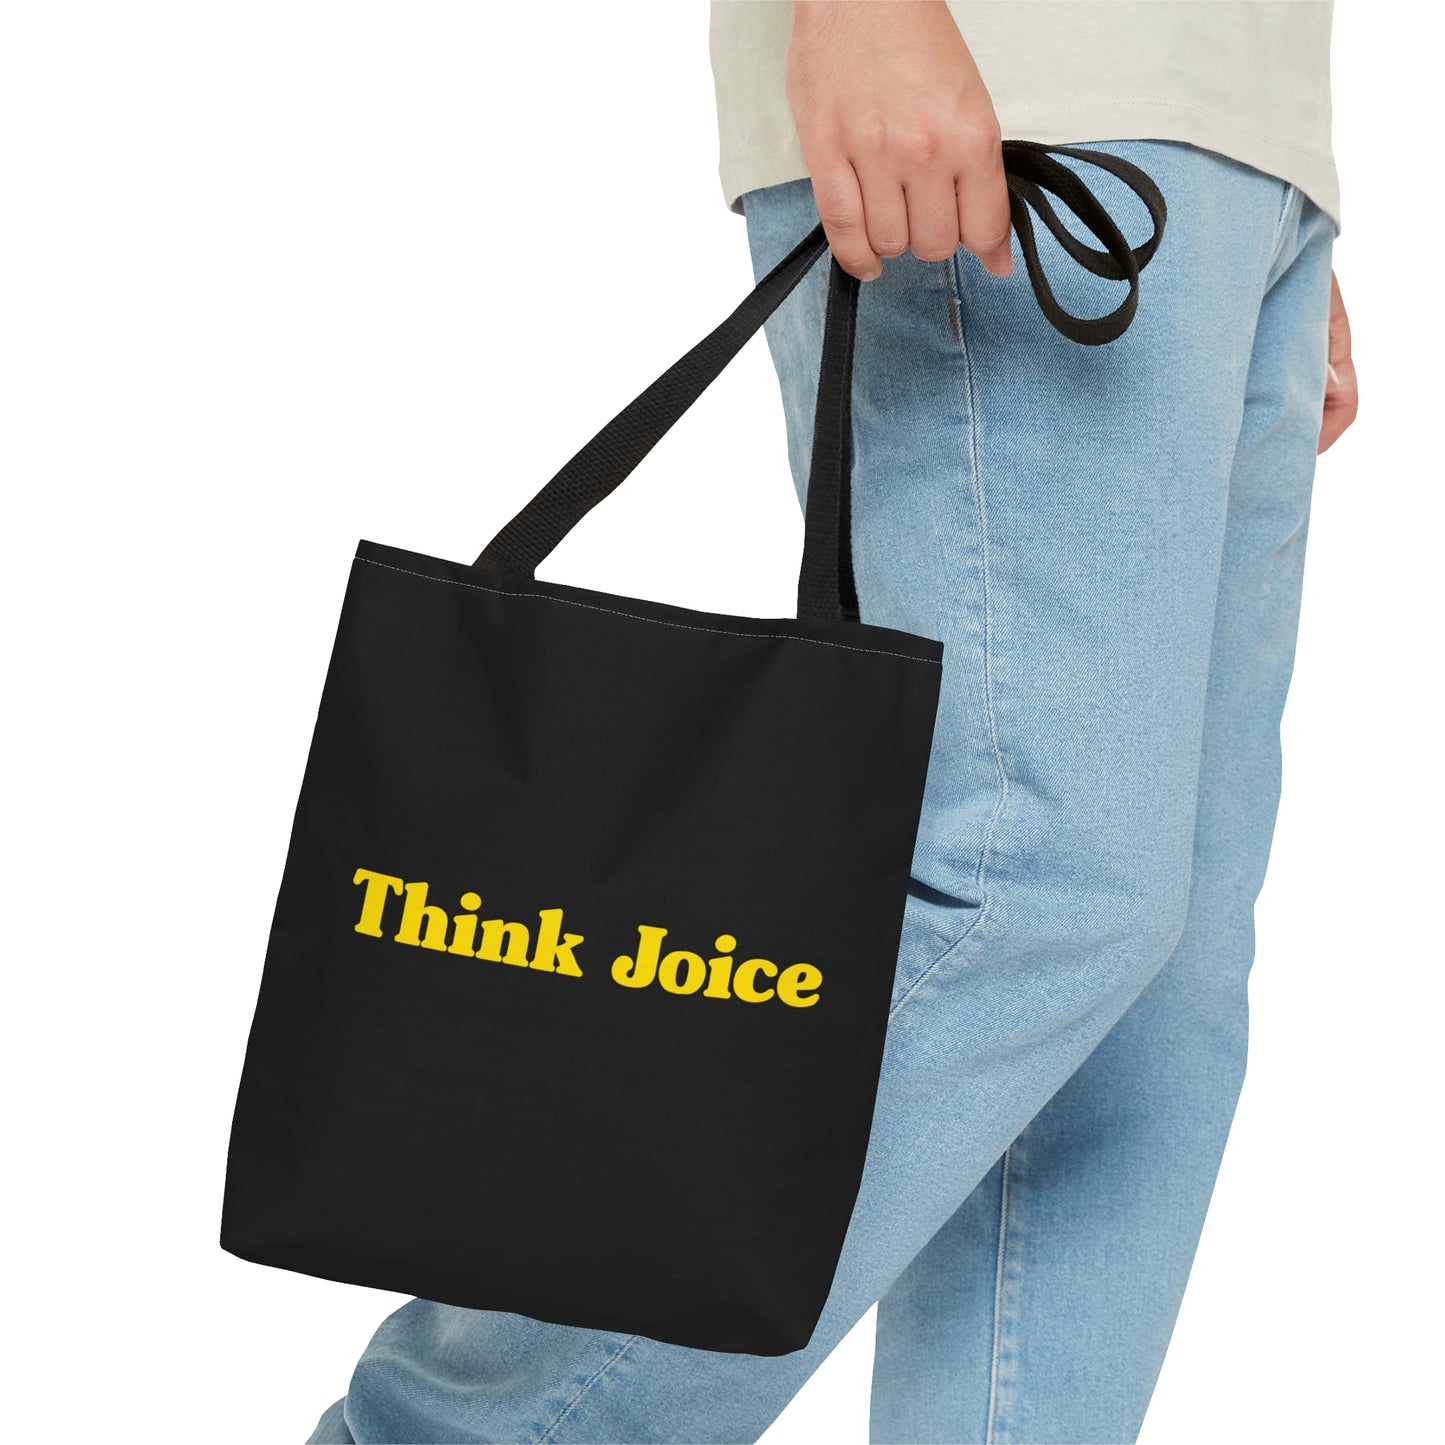 Think Joice Retro (yellow design) on Black Tote Bag